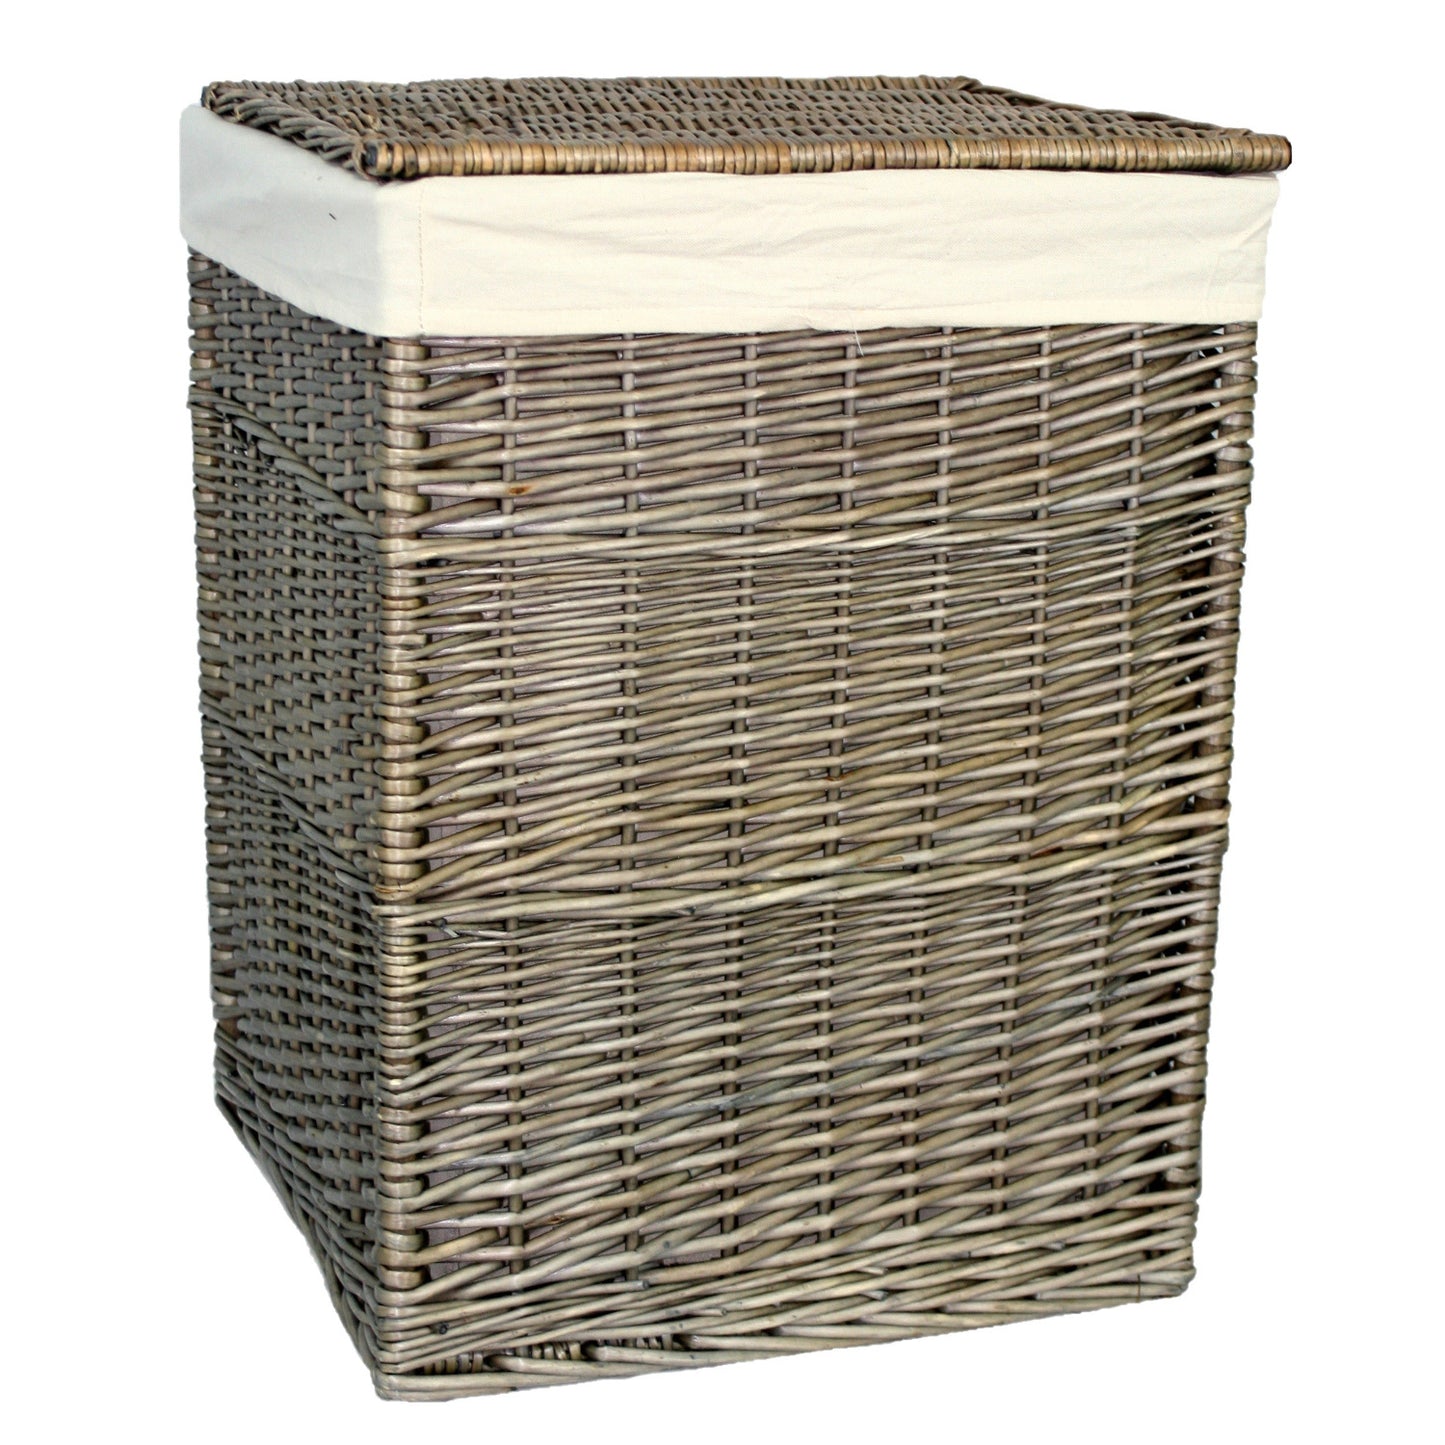 Large Square Laundry Basket With White Lining